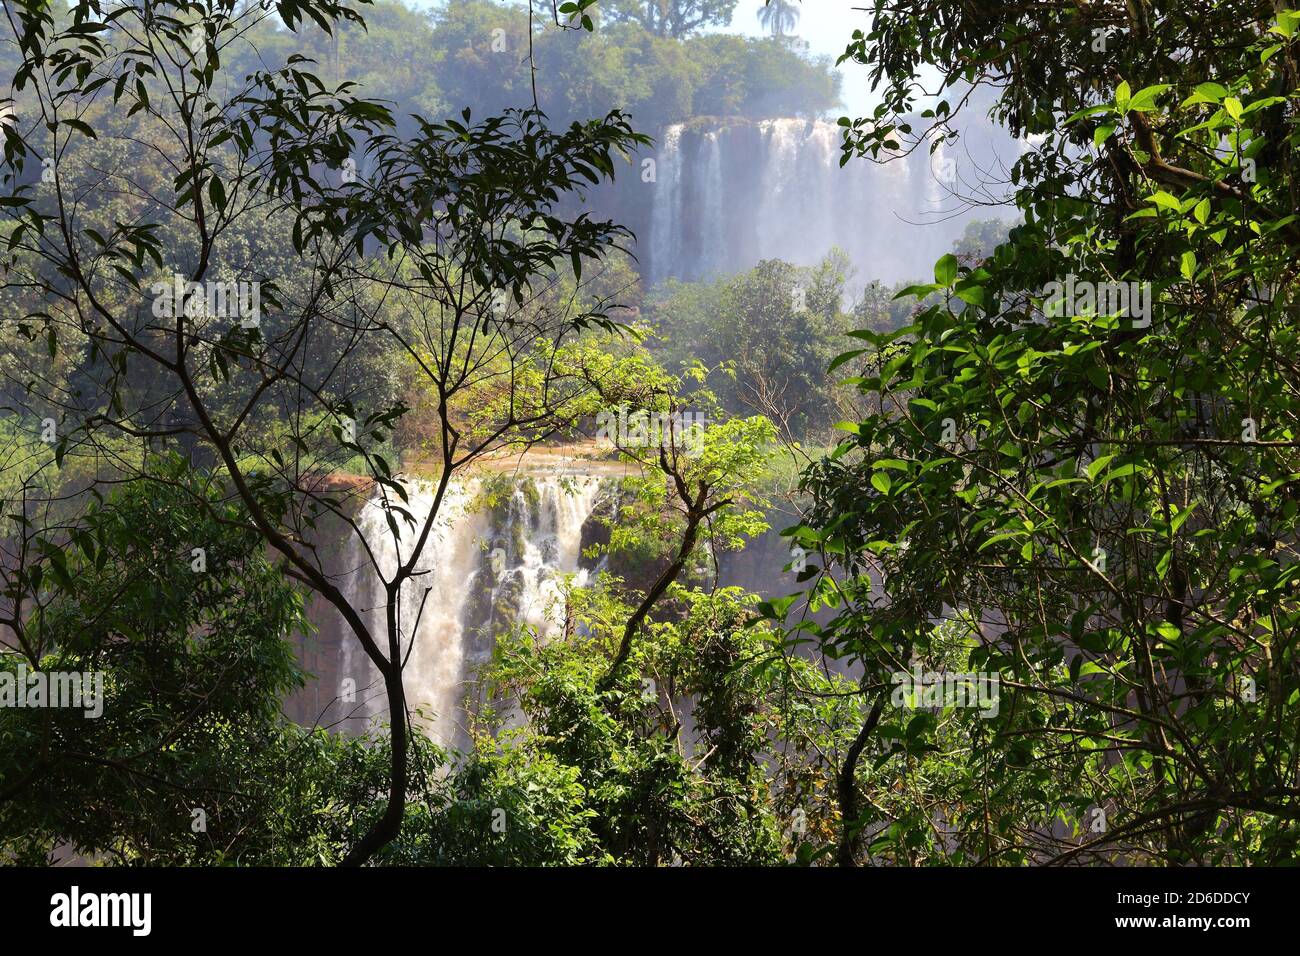 Iguazu Falls National Park in Brazil and Argentina. South America nature. Stock Photo